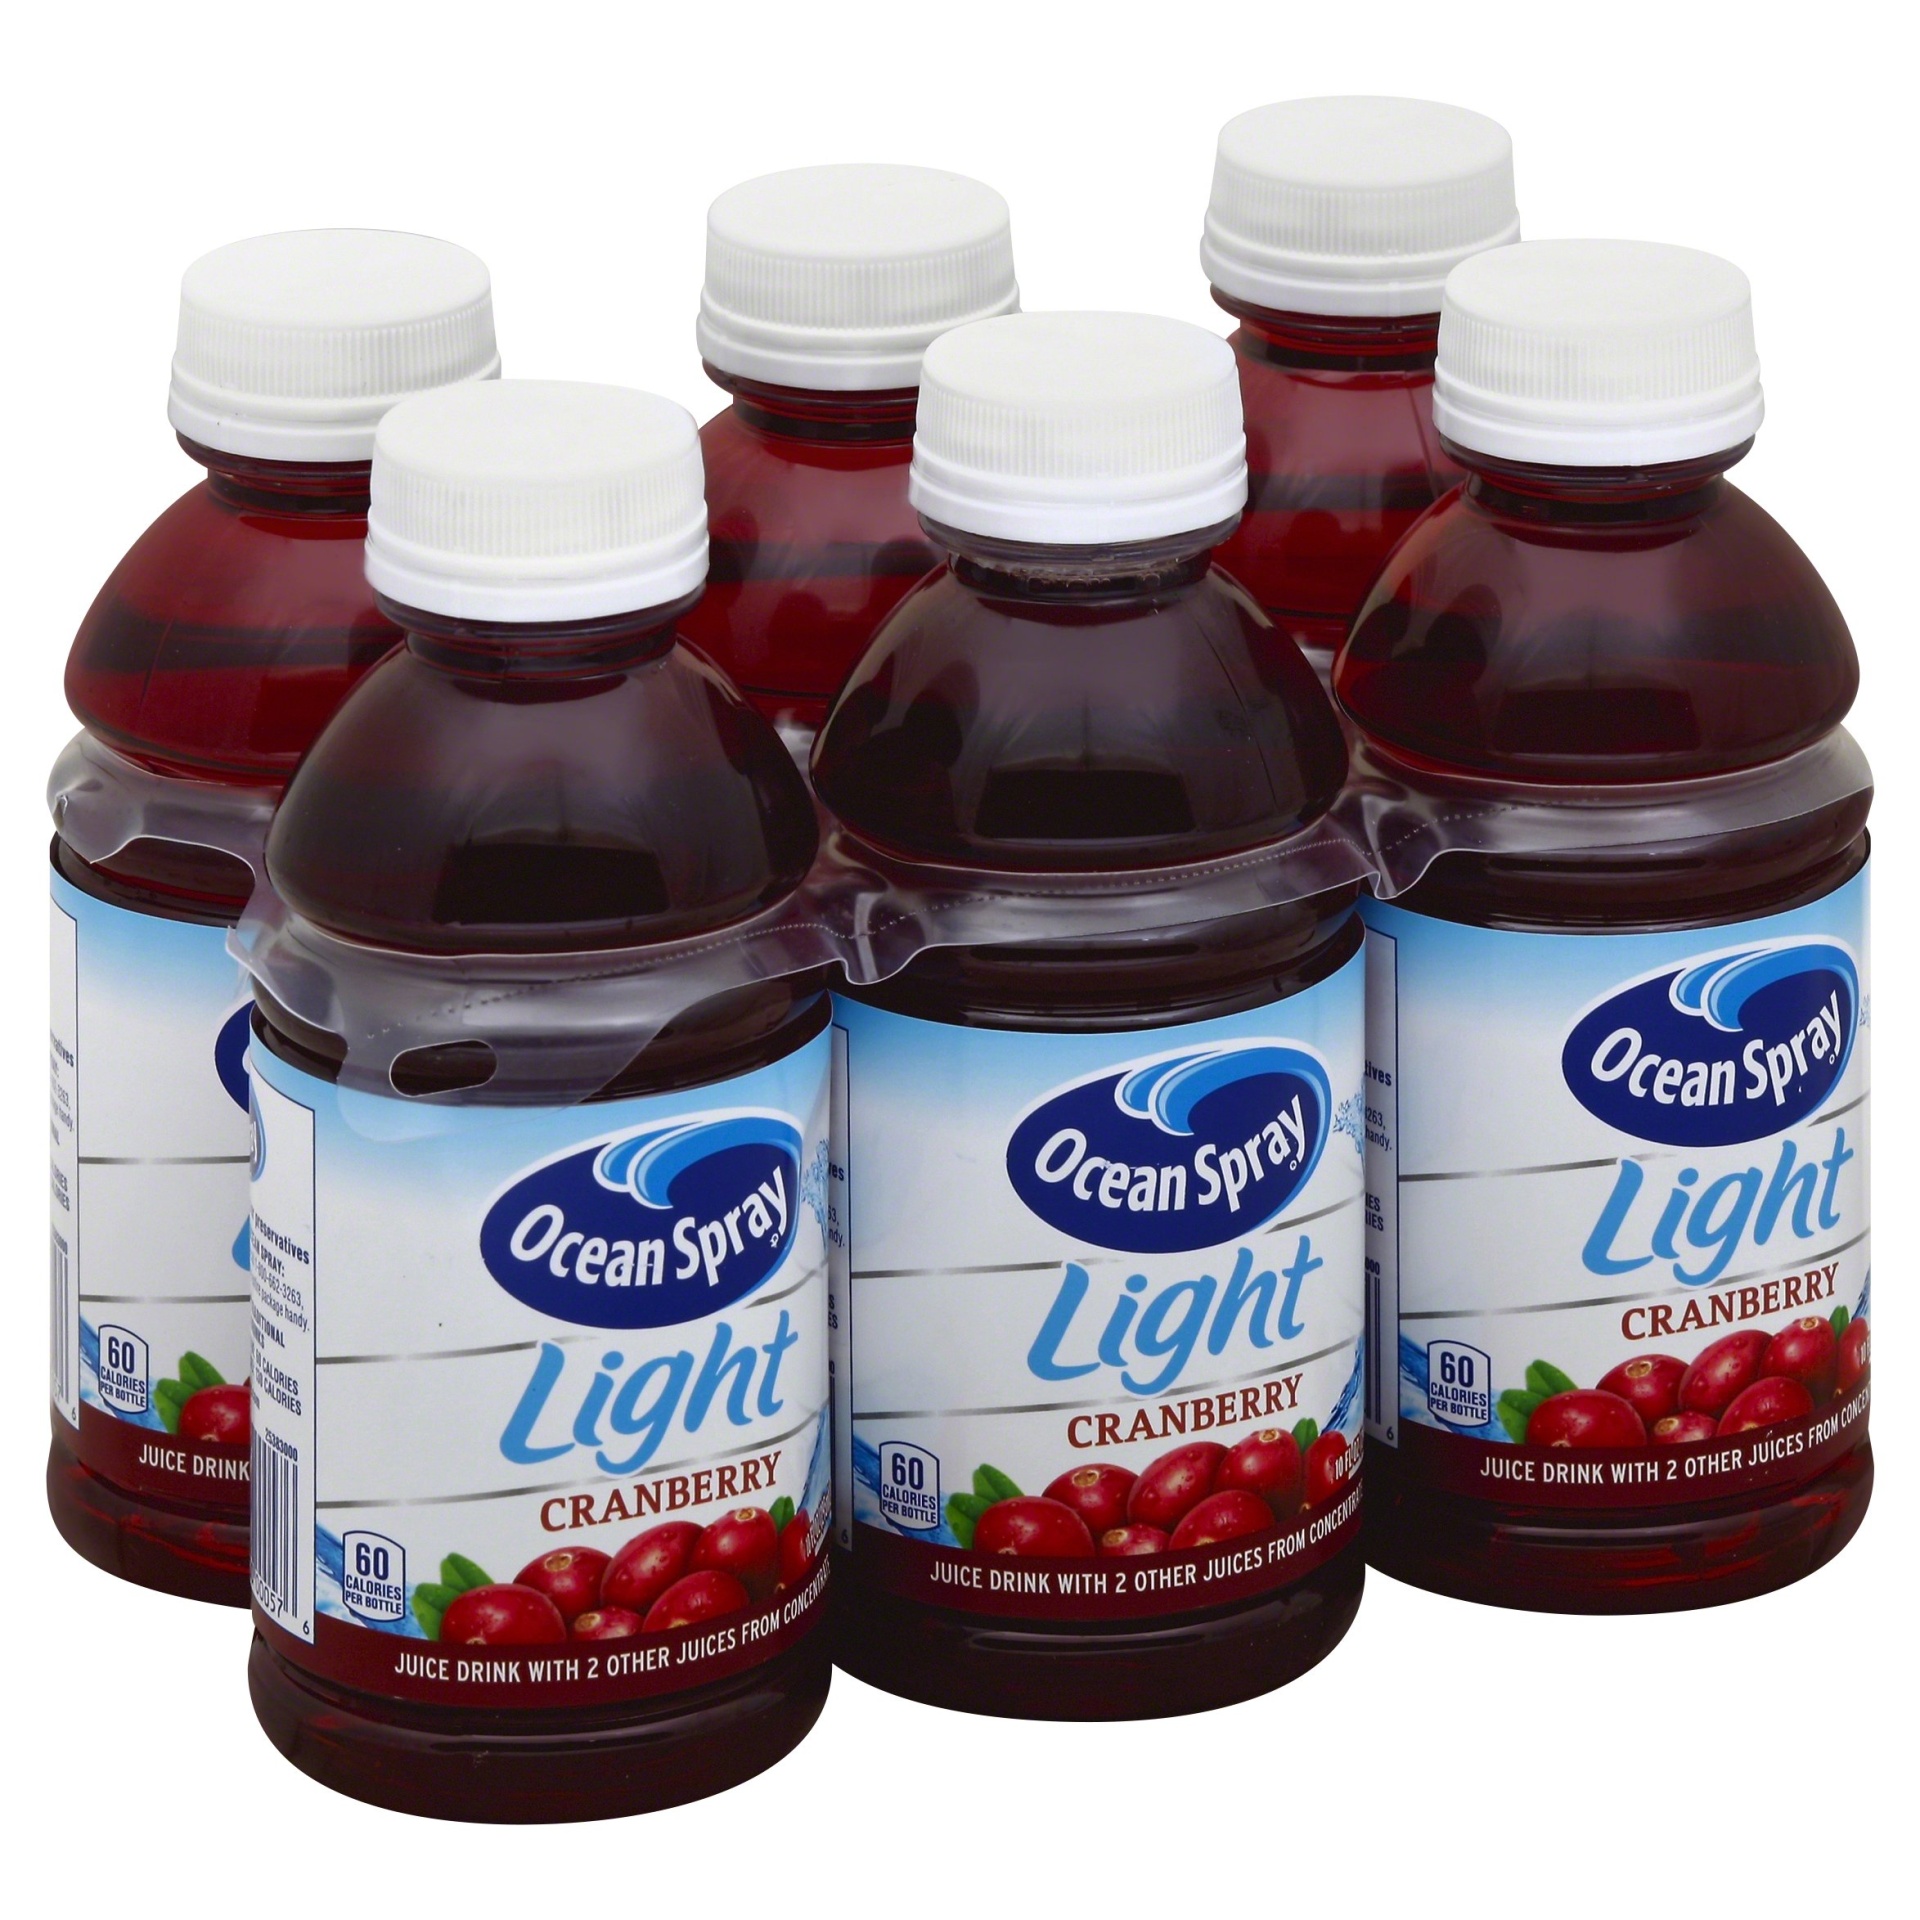 Ocean Spray Light 50 Cranberry Juice 6 ct; 10 fl oz Shipt